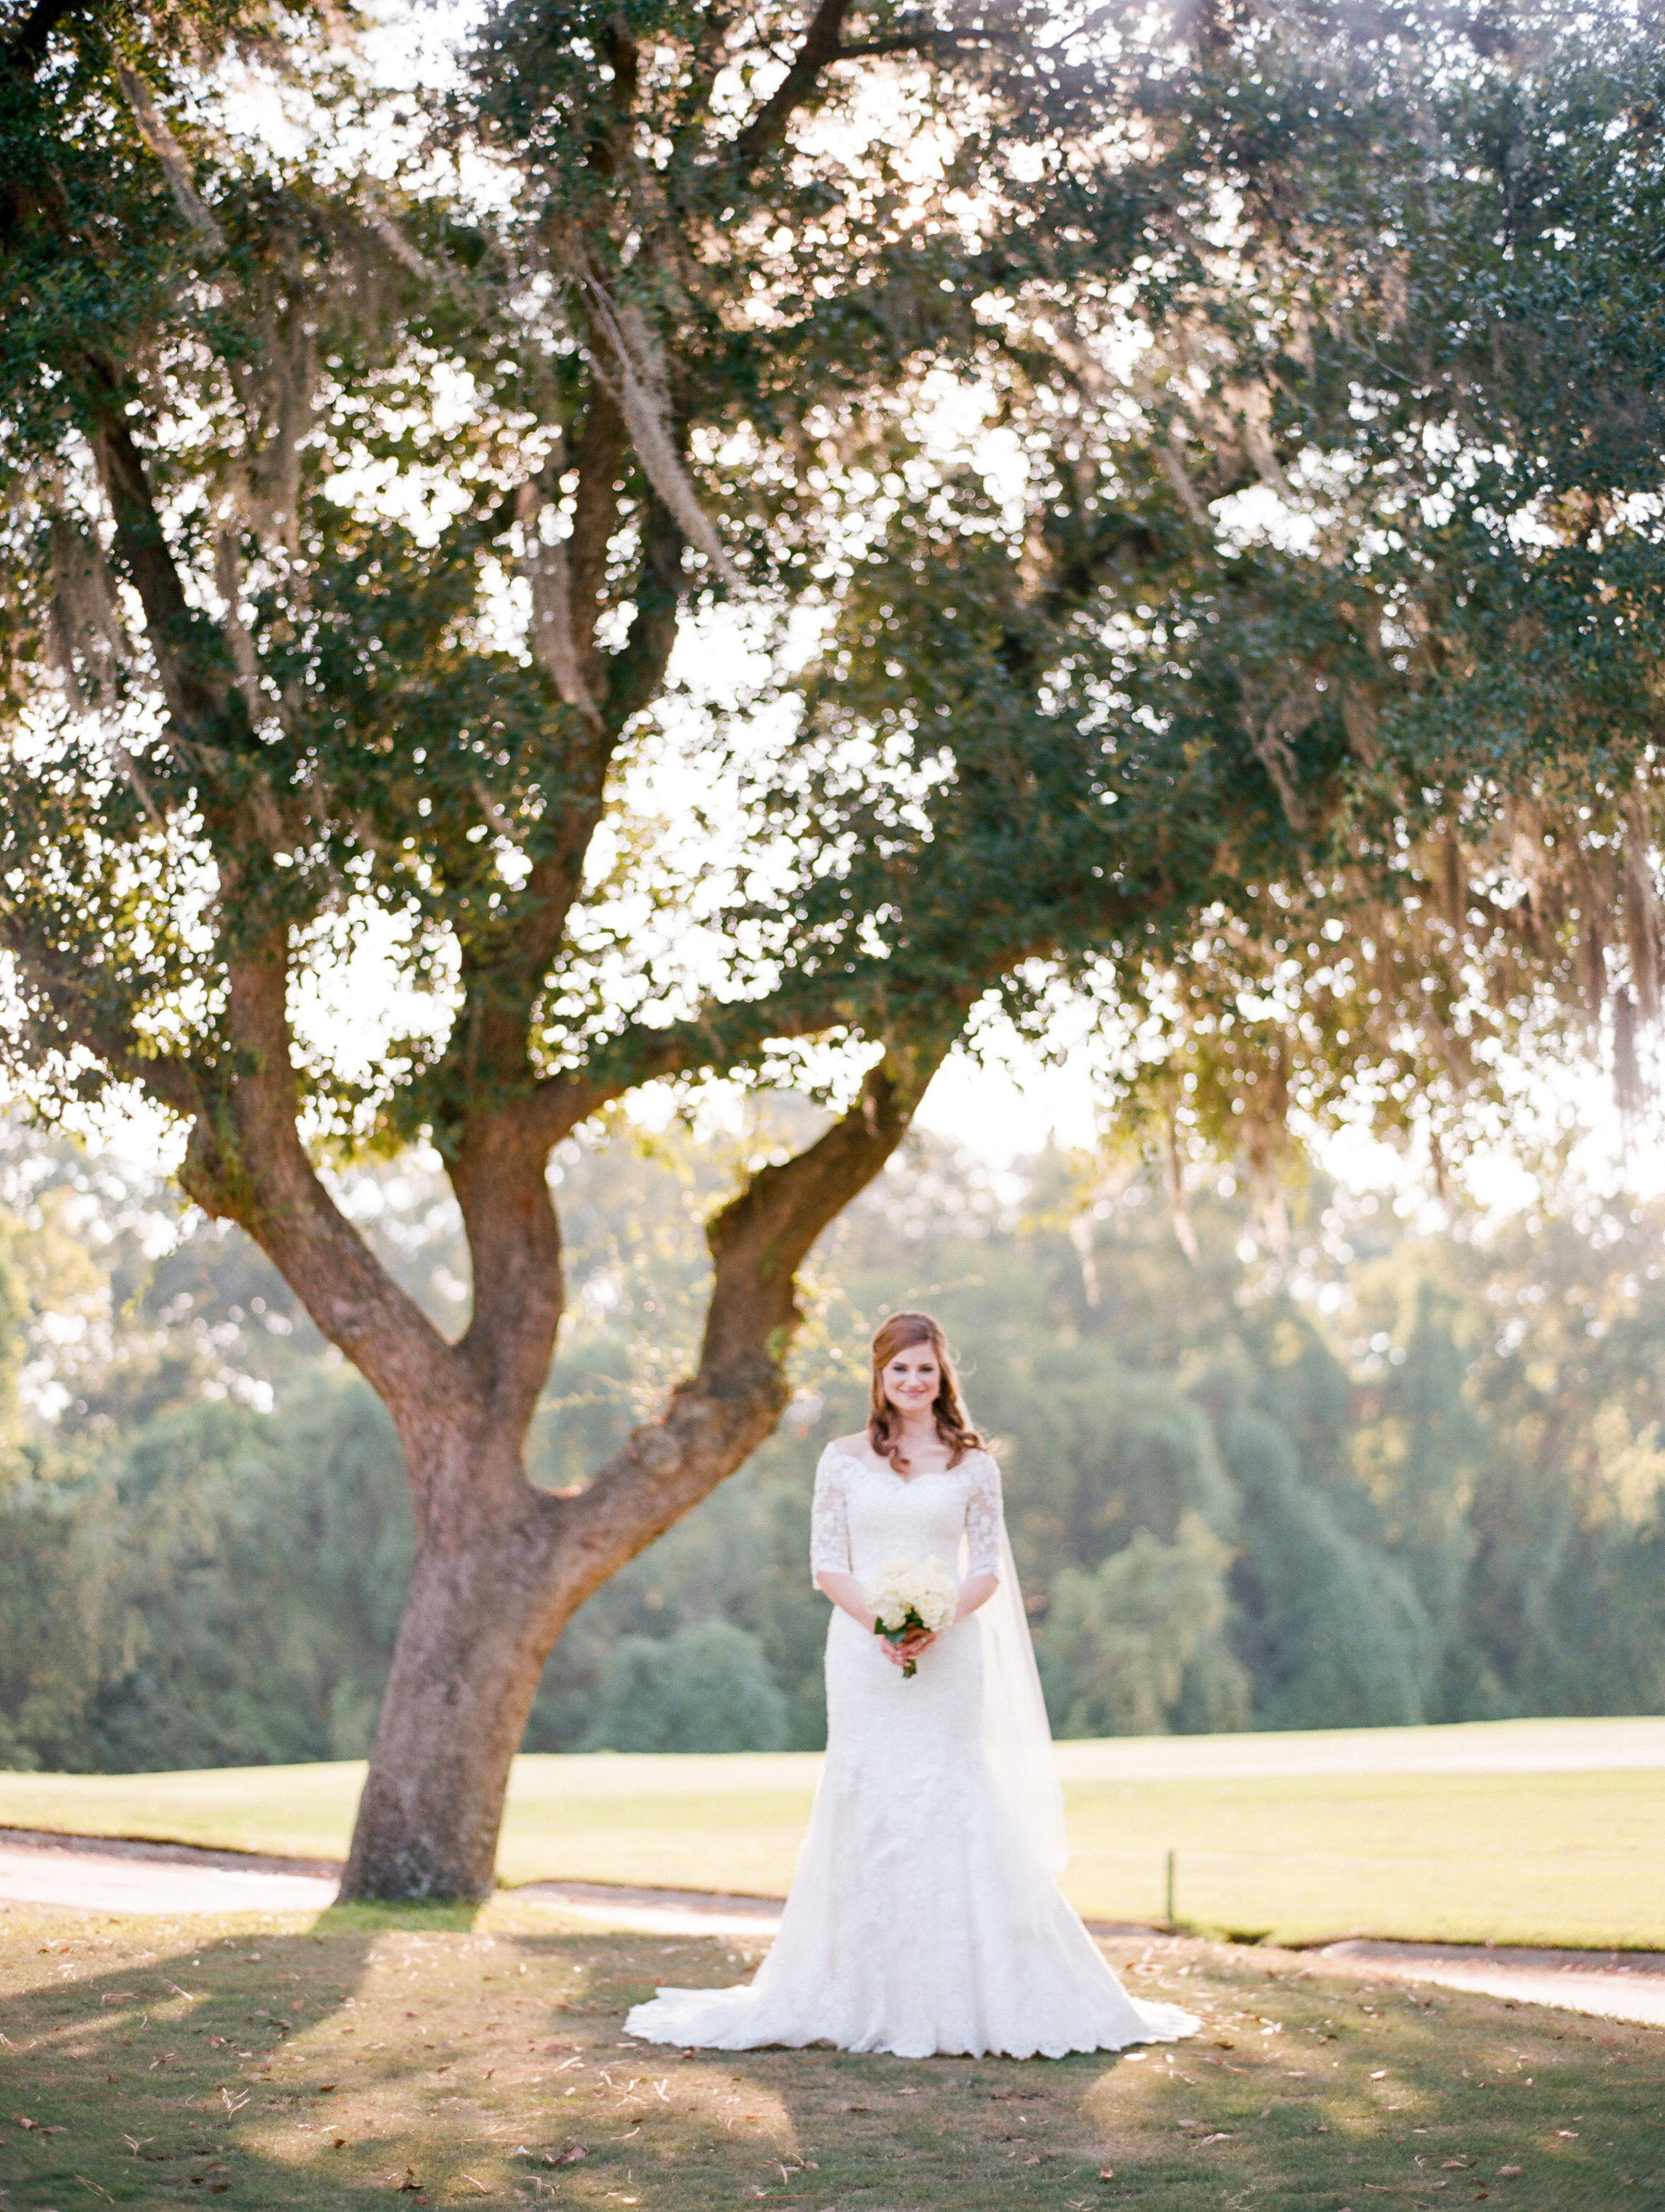 Dana-Fernandez-Photography-Film-Wedding-Photography-Houston-Bridals-Houston-Country-Club-Photographer-3.jpg